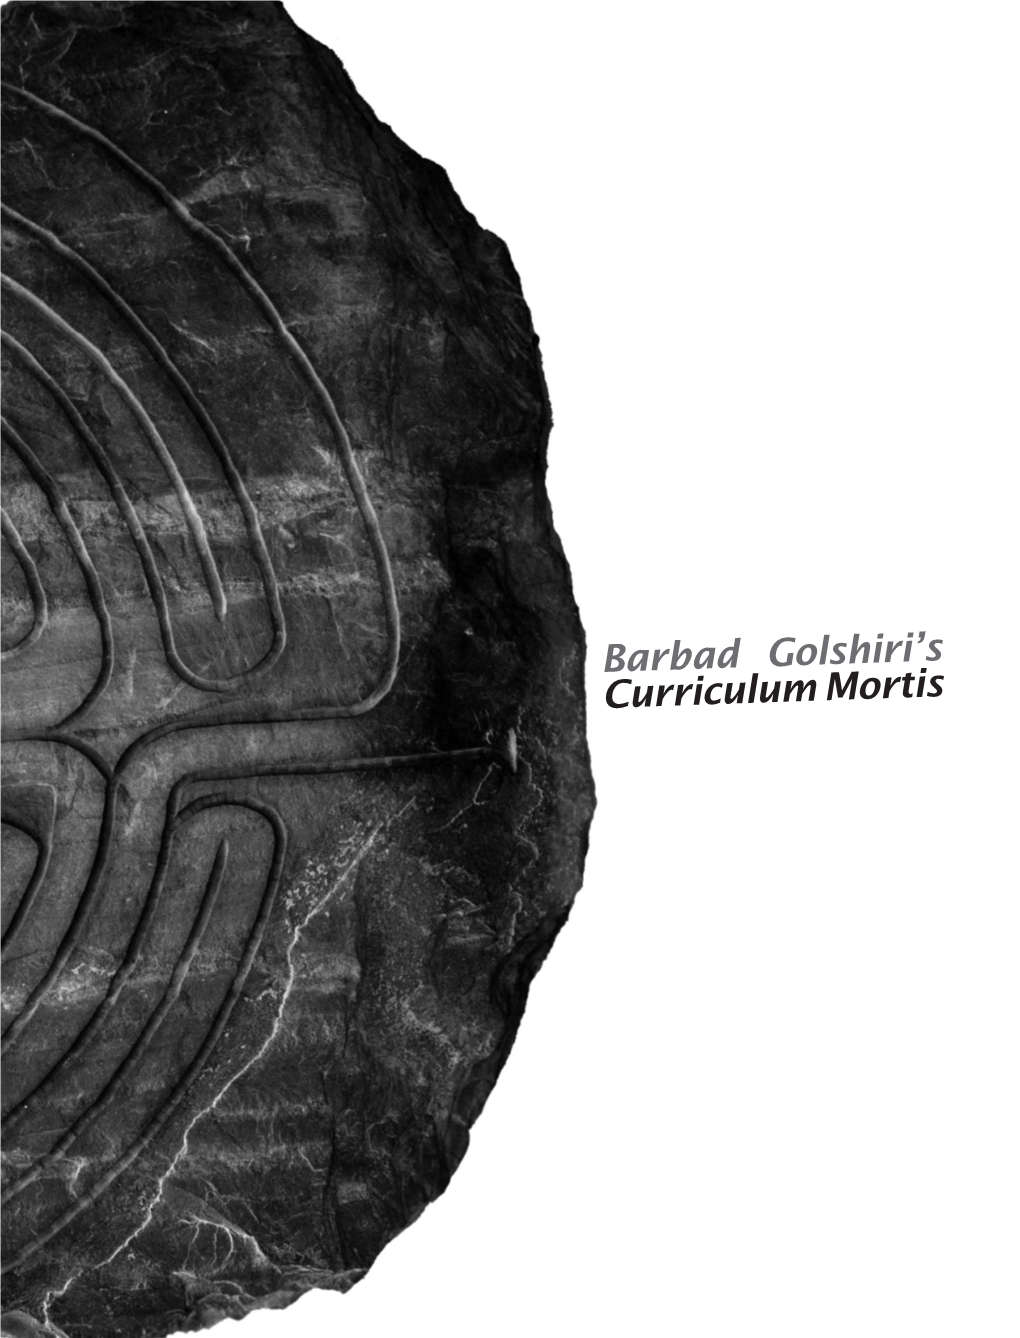 Barbad Golshiri's Curriculum Mortis